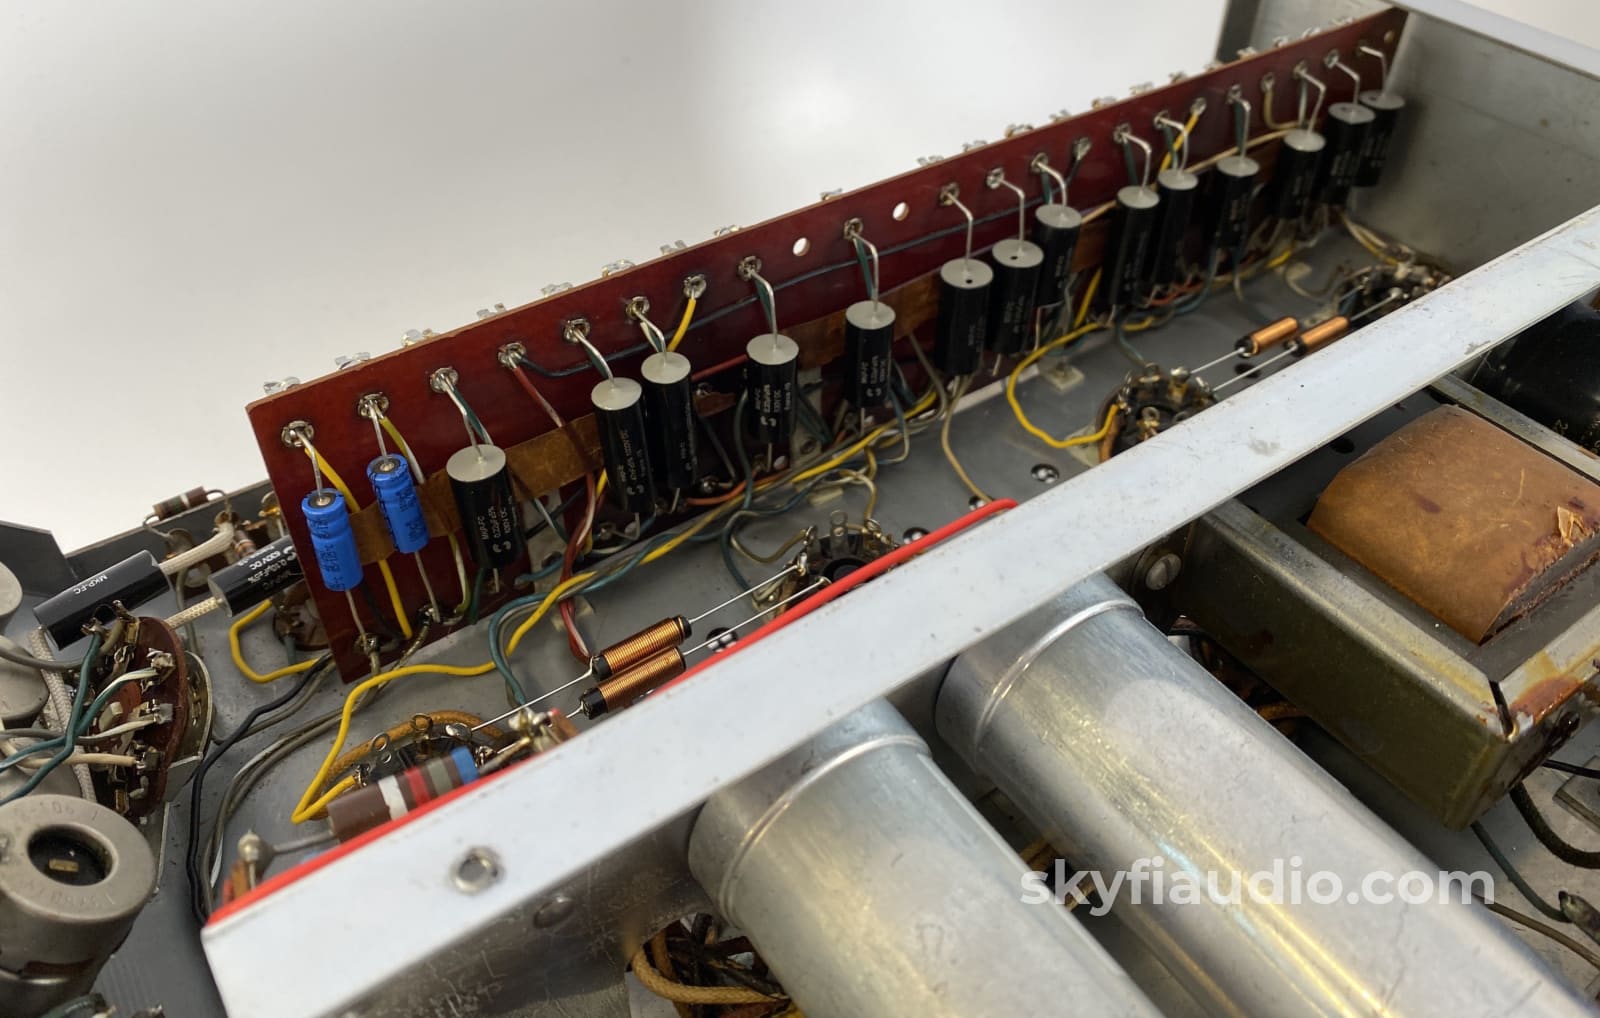 Mcintosh Mc240 Vintage Tube Amplifier - Restored And Sounding Amazing